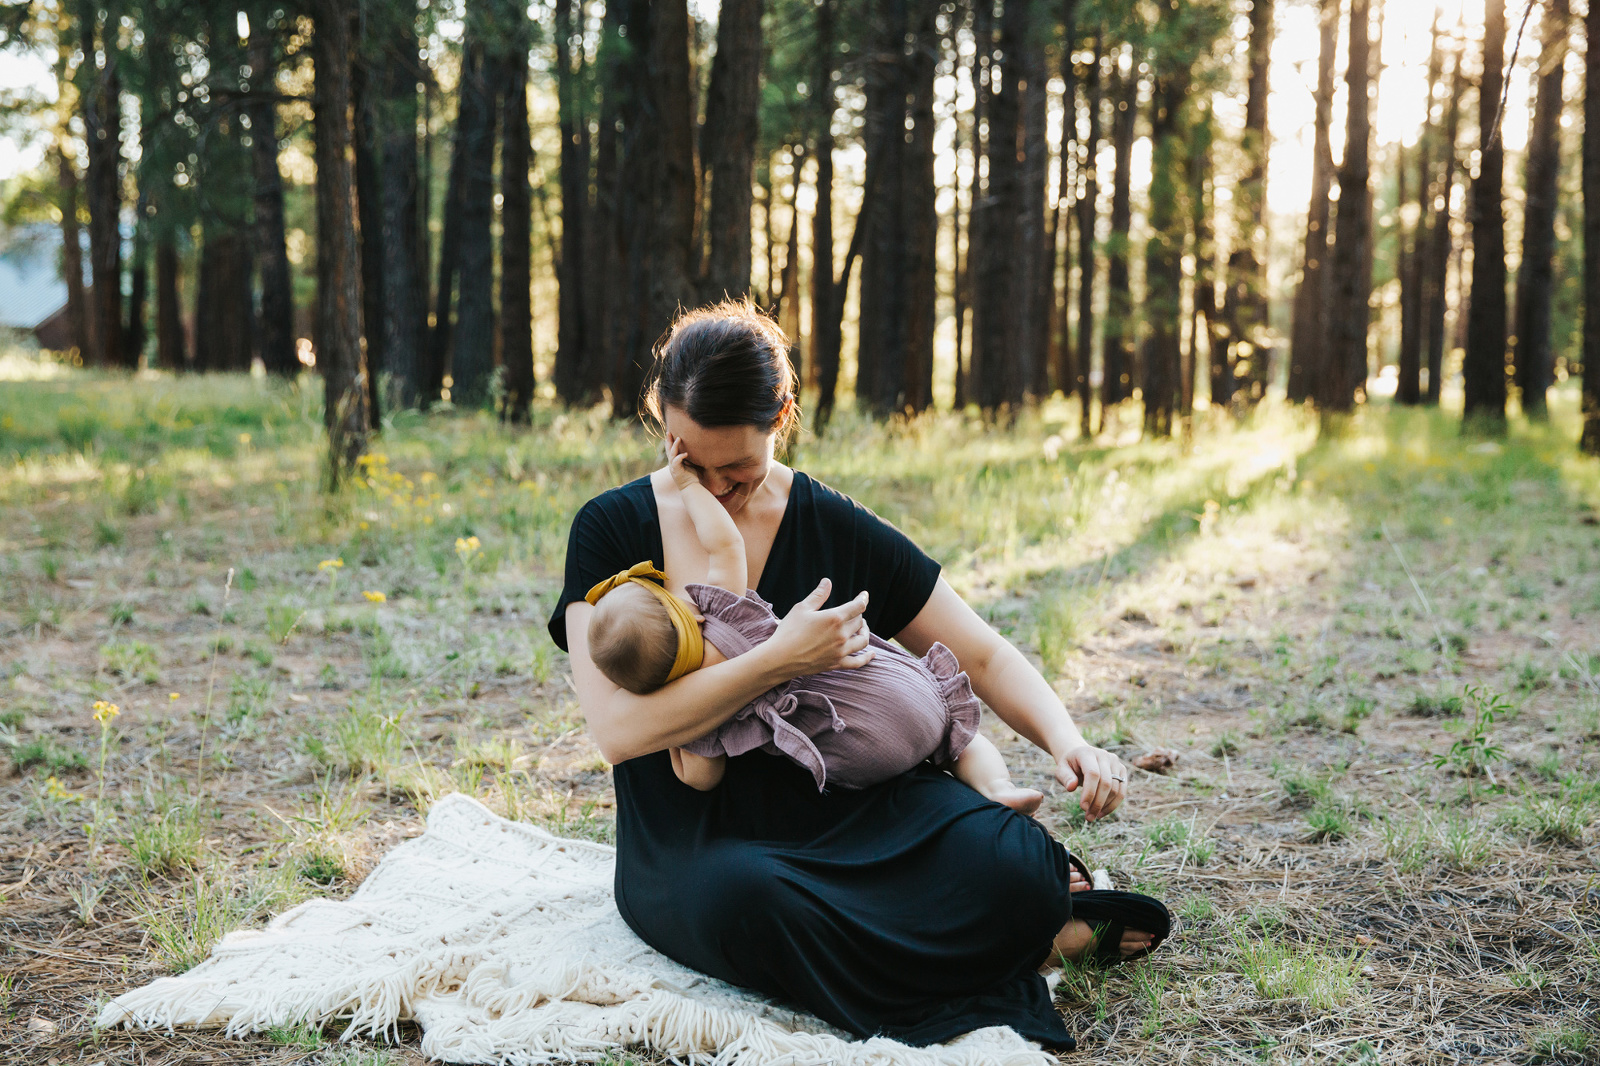 Hattie-Baby-Nursing-Family-Hillsboro-Oregon-Meg-Ross-Photography